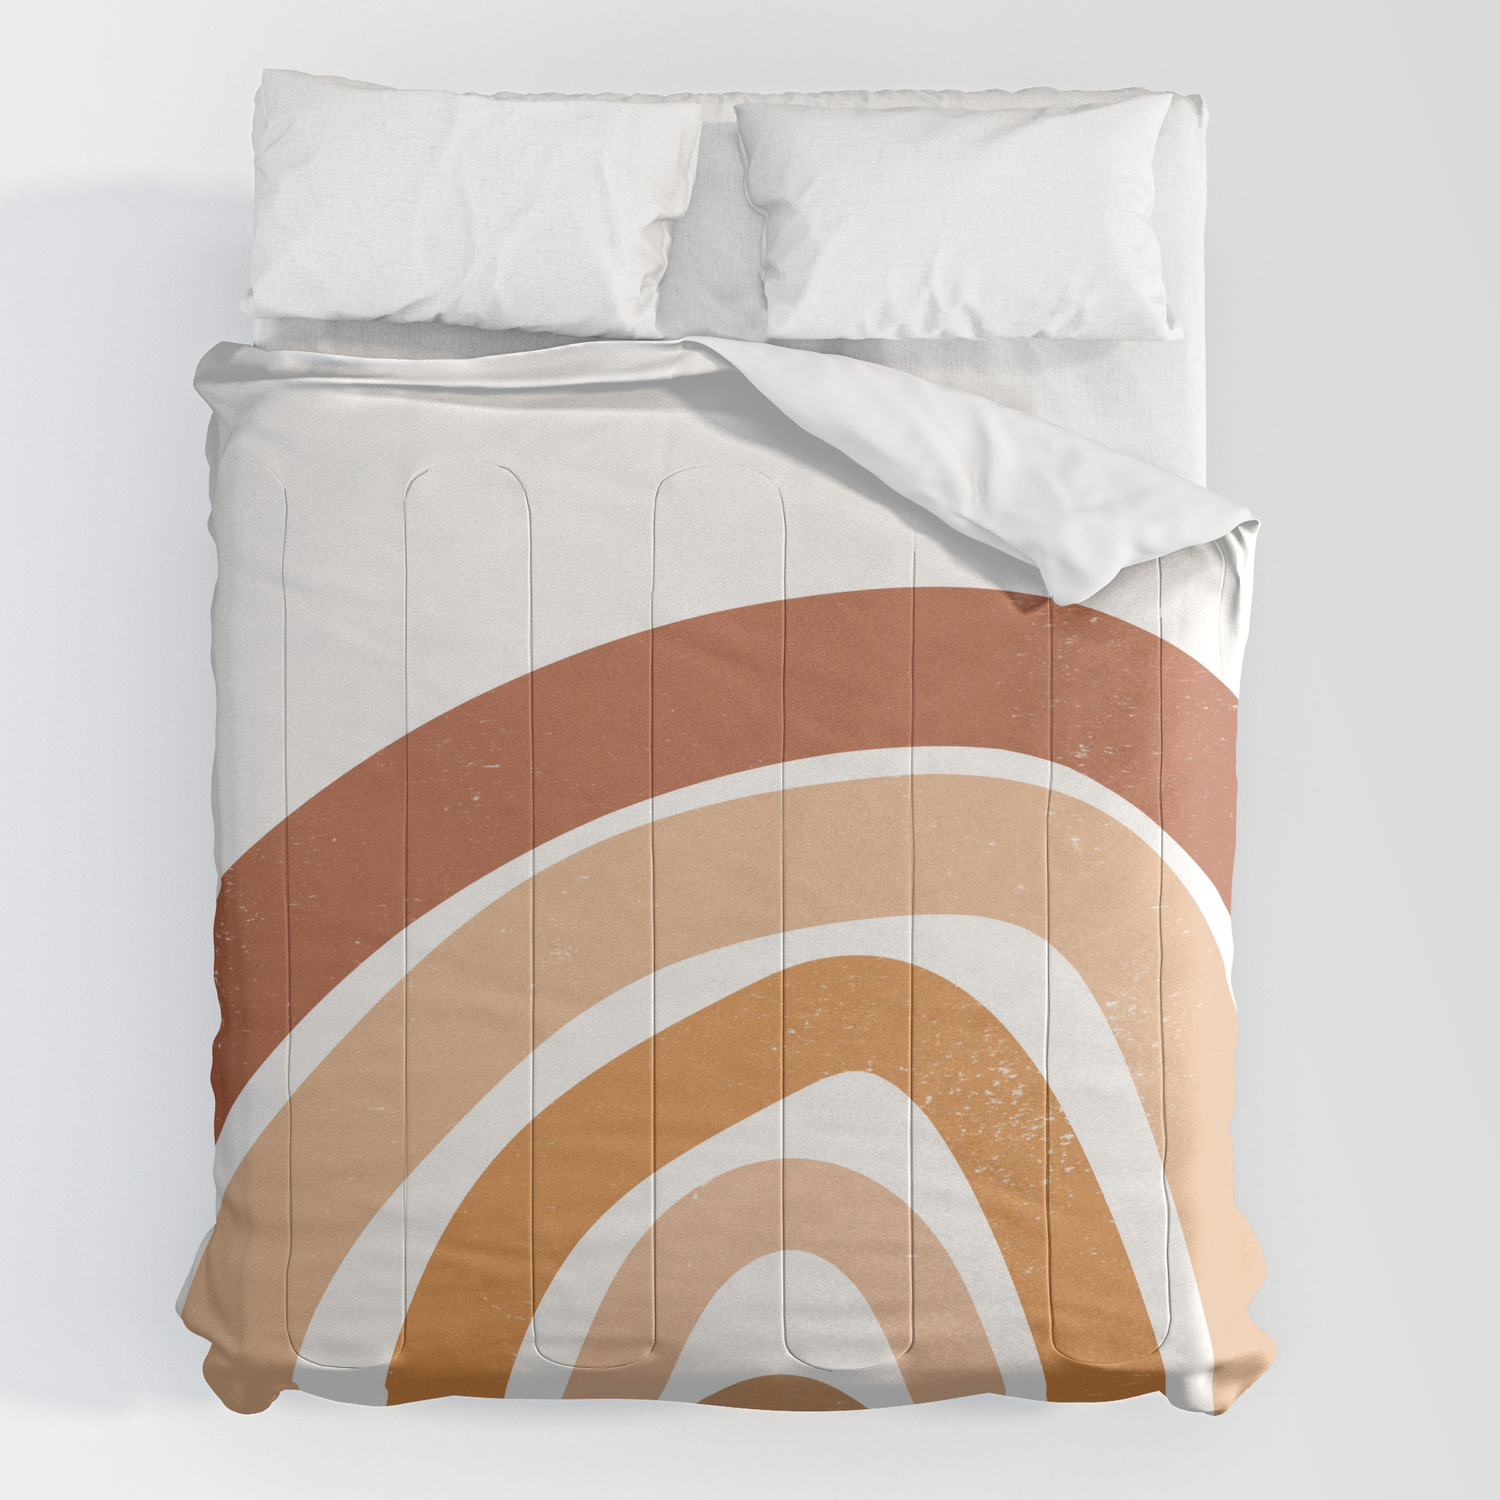 Simplistic Earth Tone Rainbow Design, Earth Tone Bed Covers